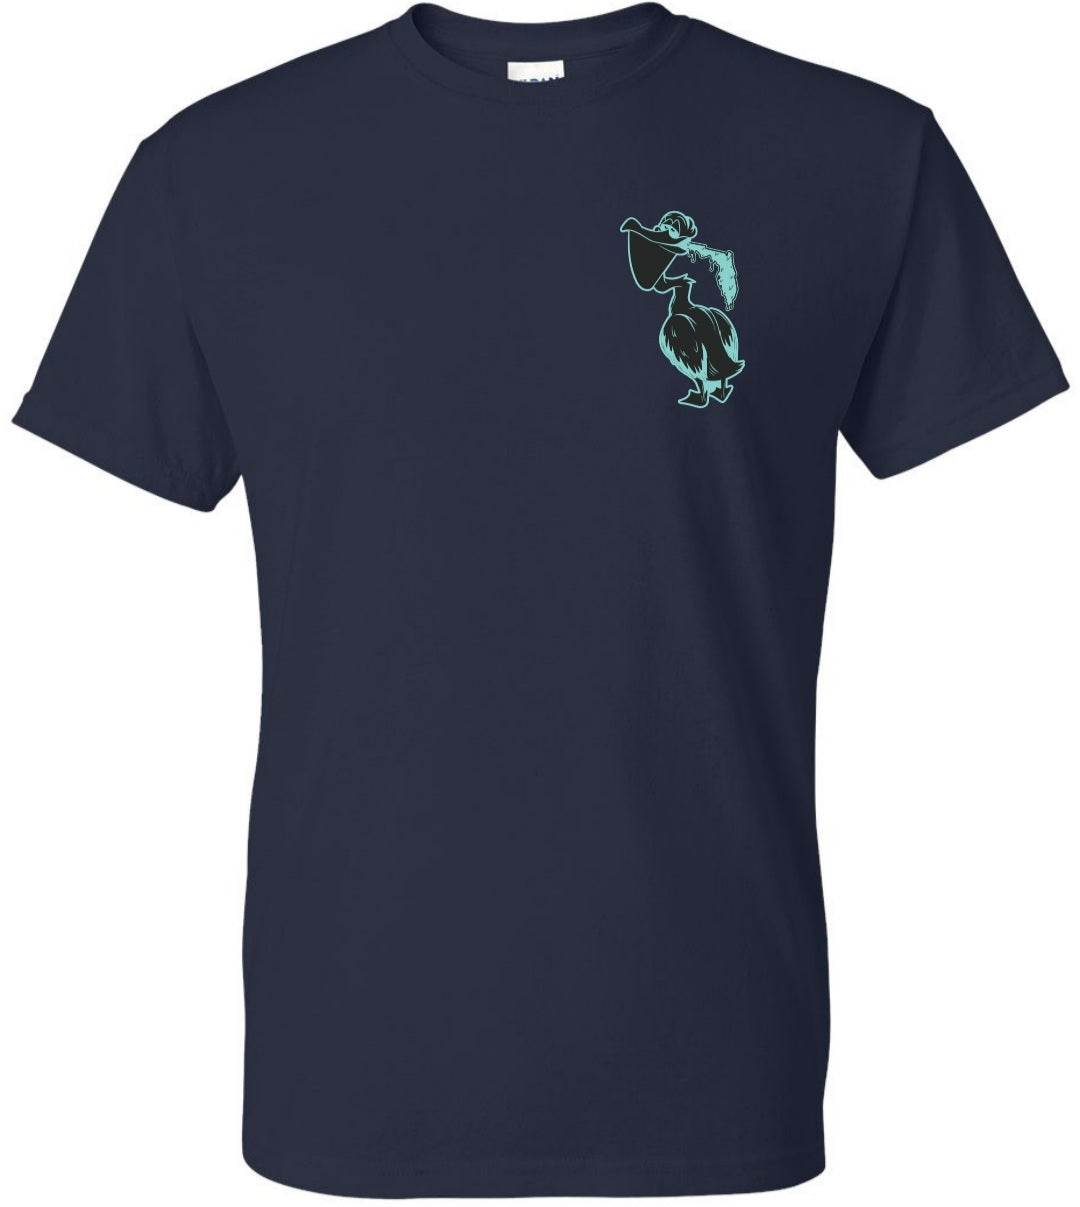 Pelican Short sleeve Black/Teal CottonT-shirt